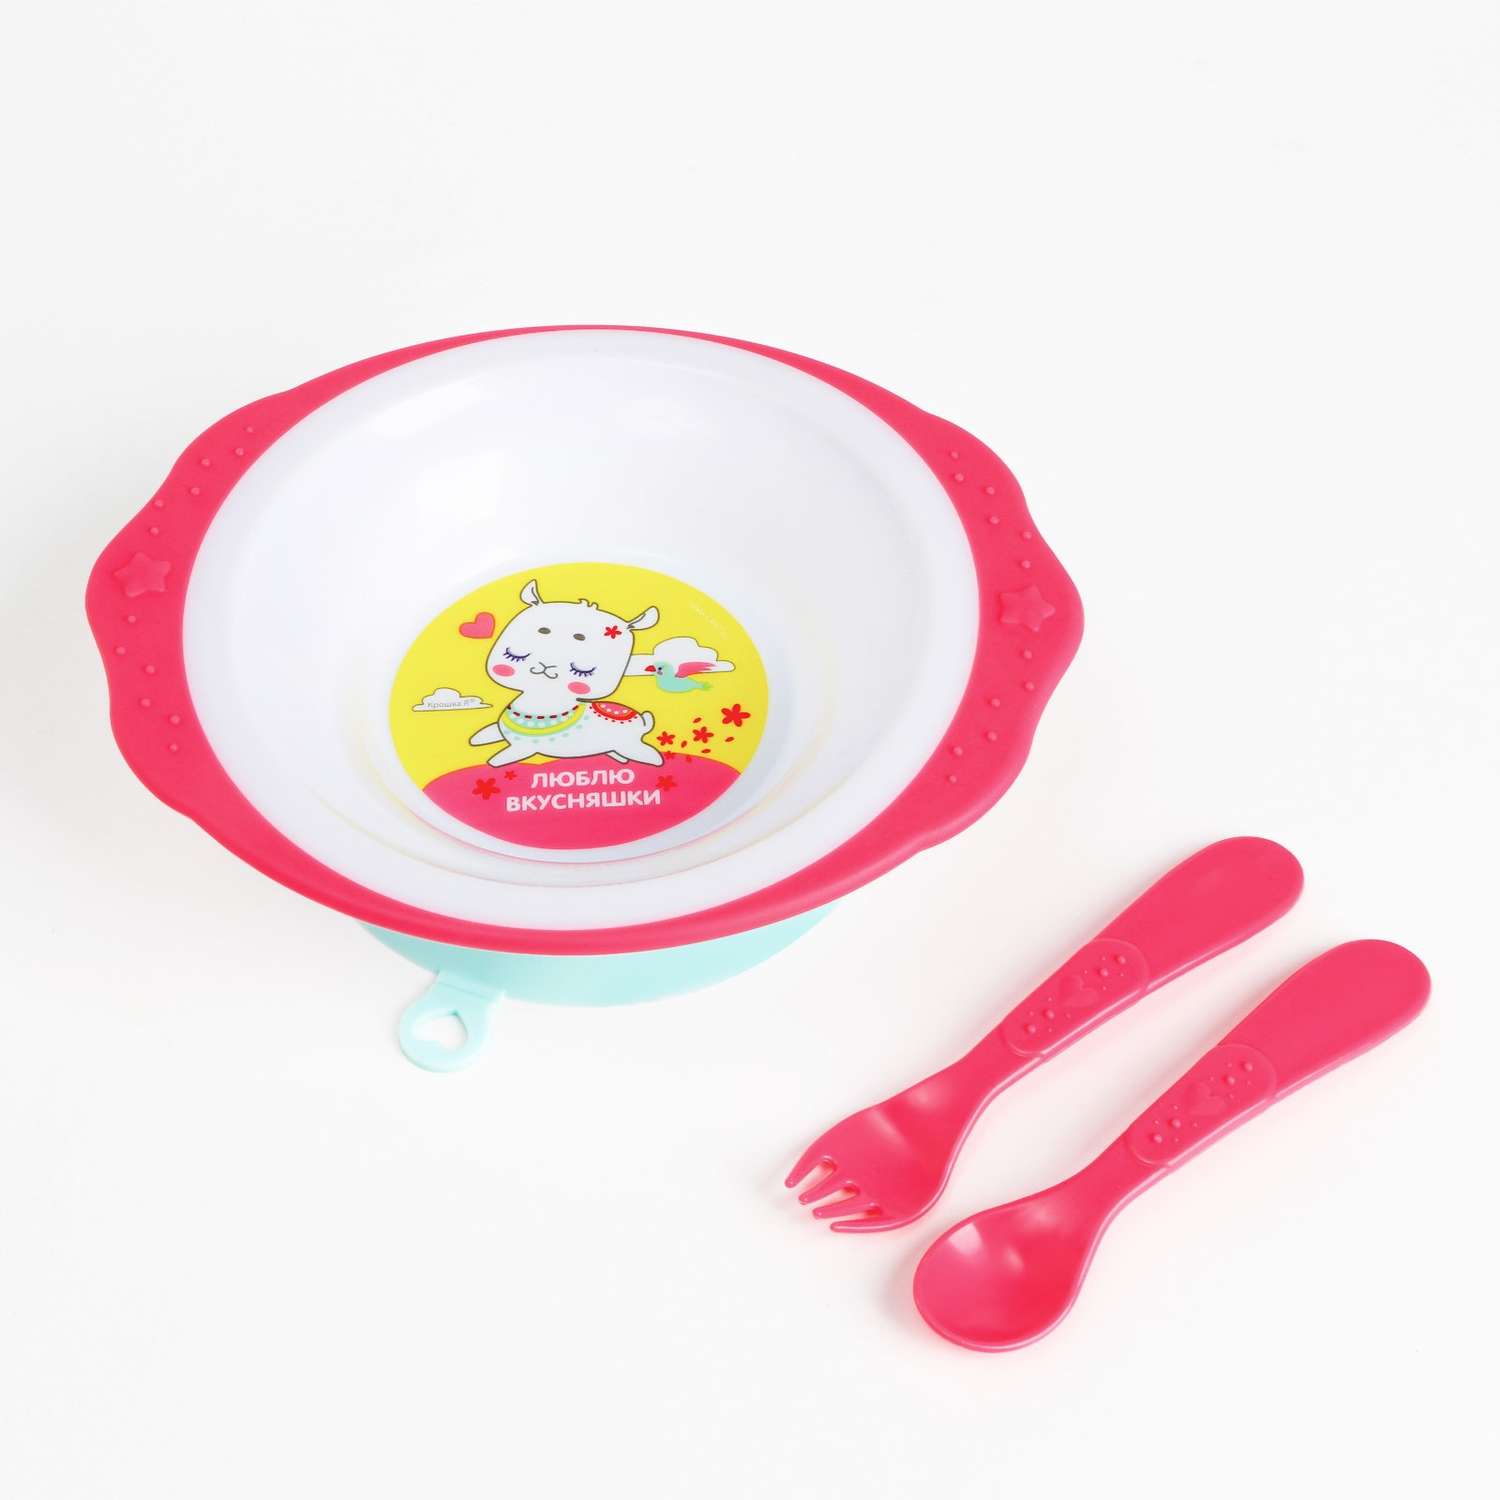 Набор детской посуды Mum and Baby «Люблю вкусняшки» тарелка на присоске 250 мл вилка ложка - фото 1